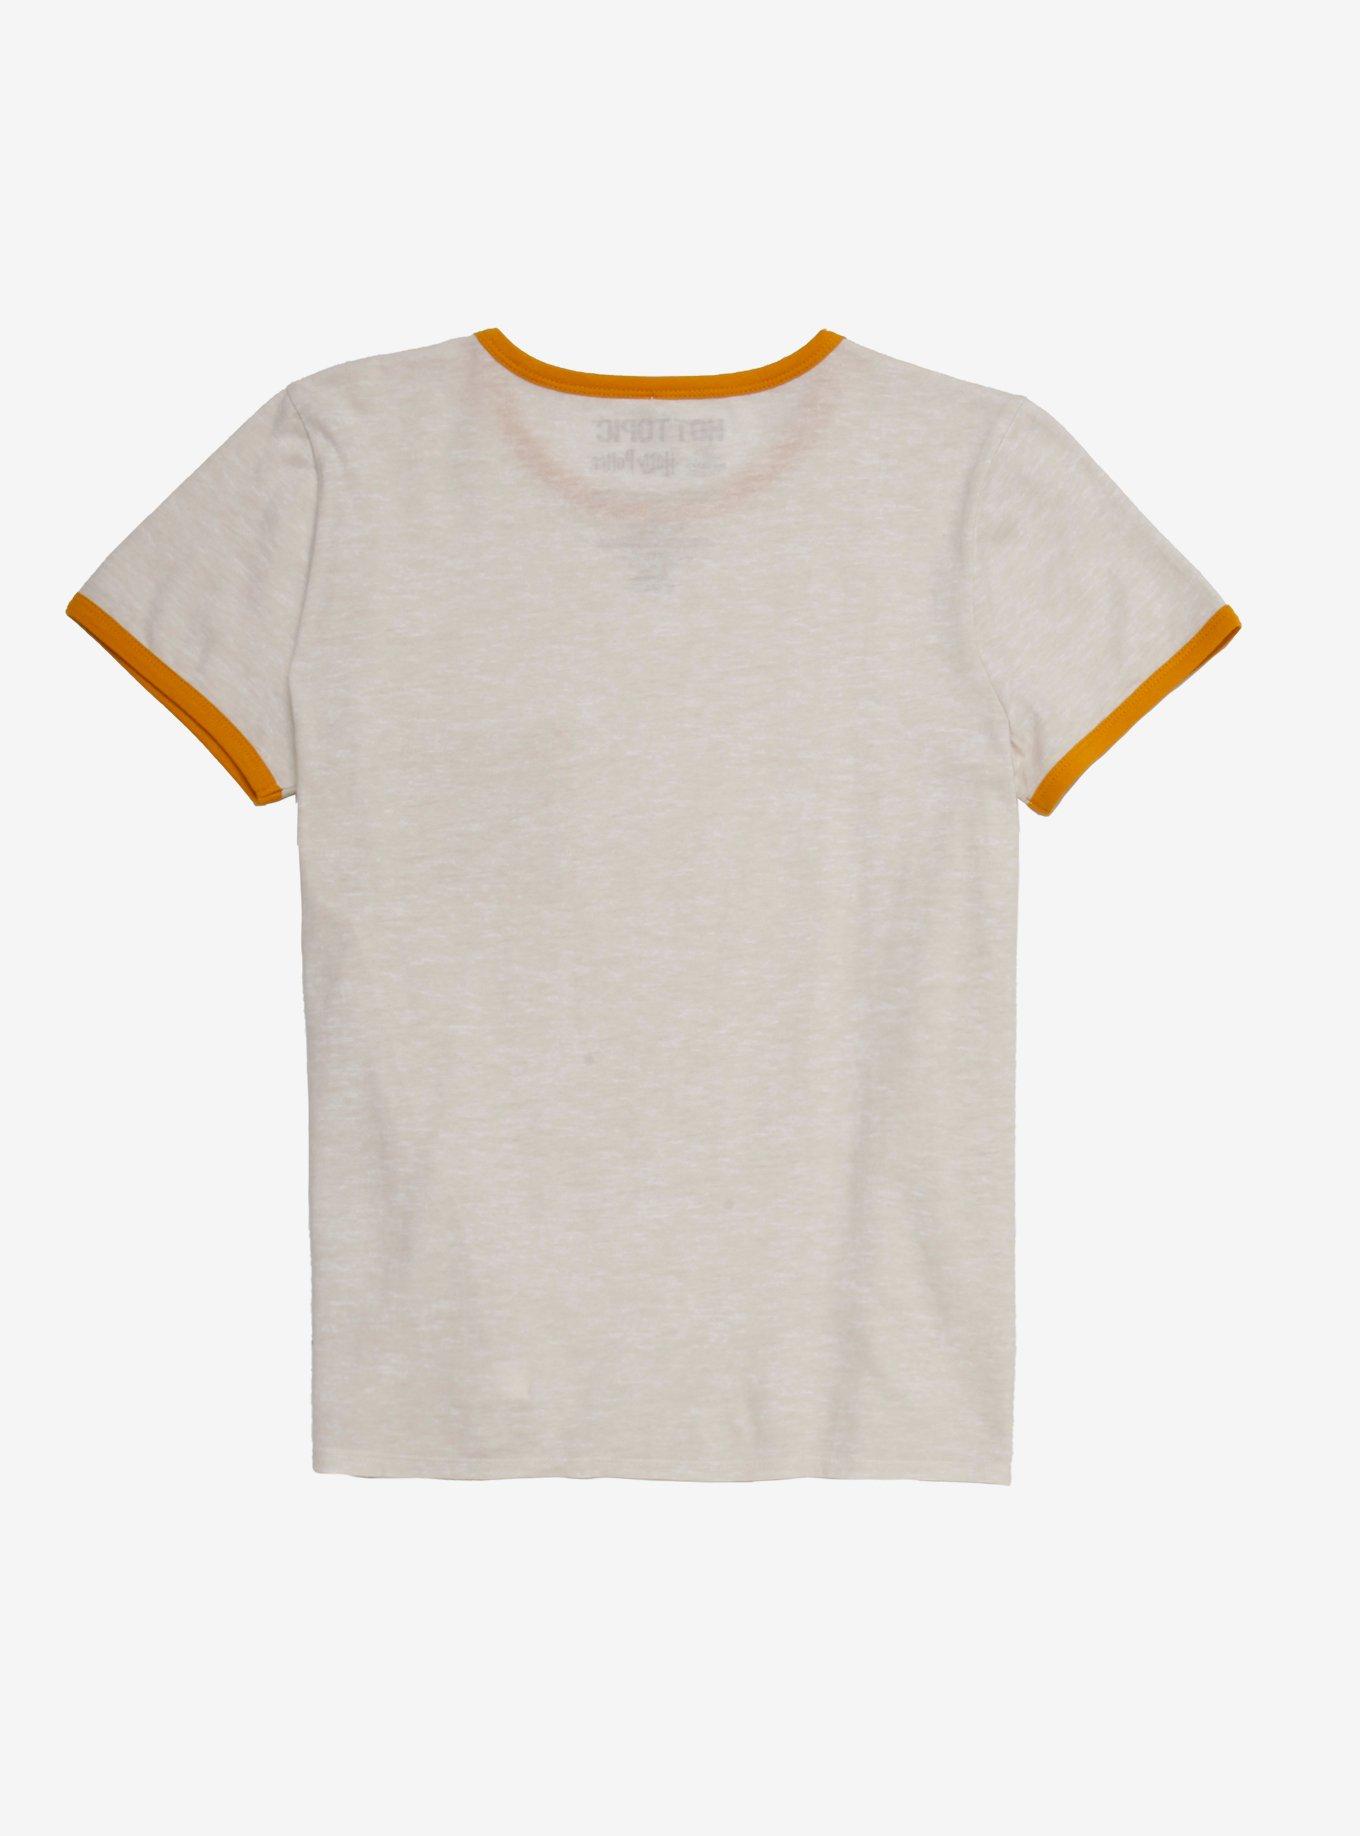 Harry Potter Hufflepuff Pocket Girls Ringer T-Shirt Plus Size, YELLOW, alternate